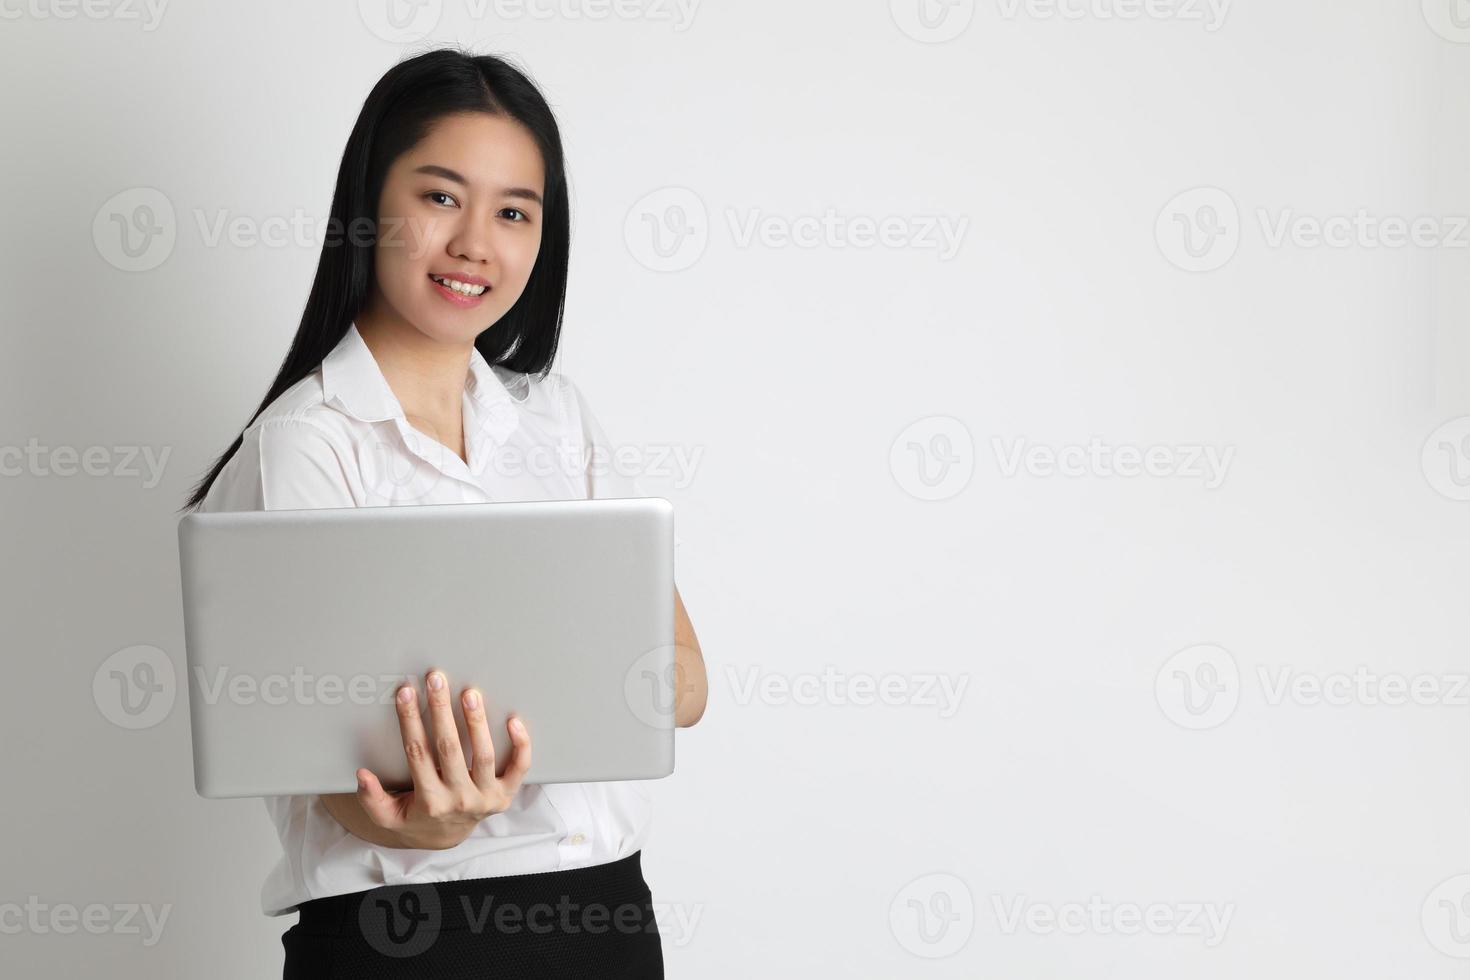 student aziatisch meisje foto